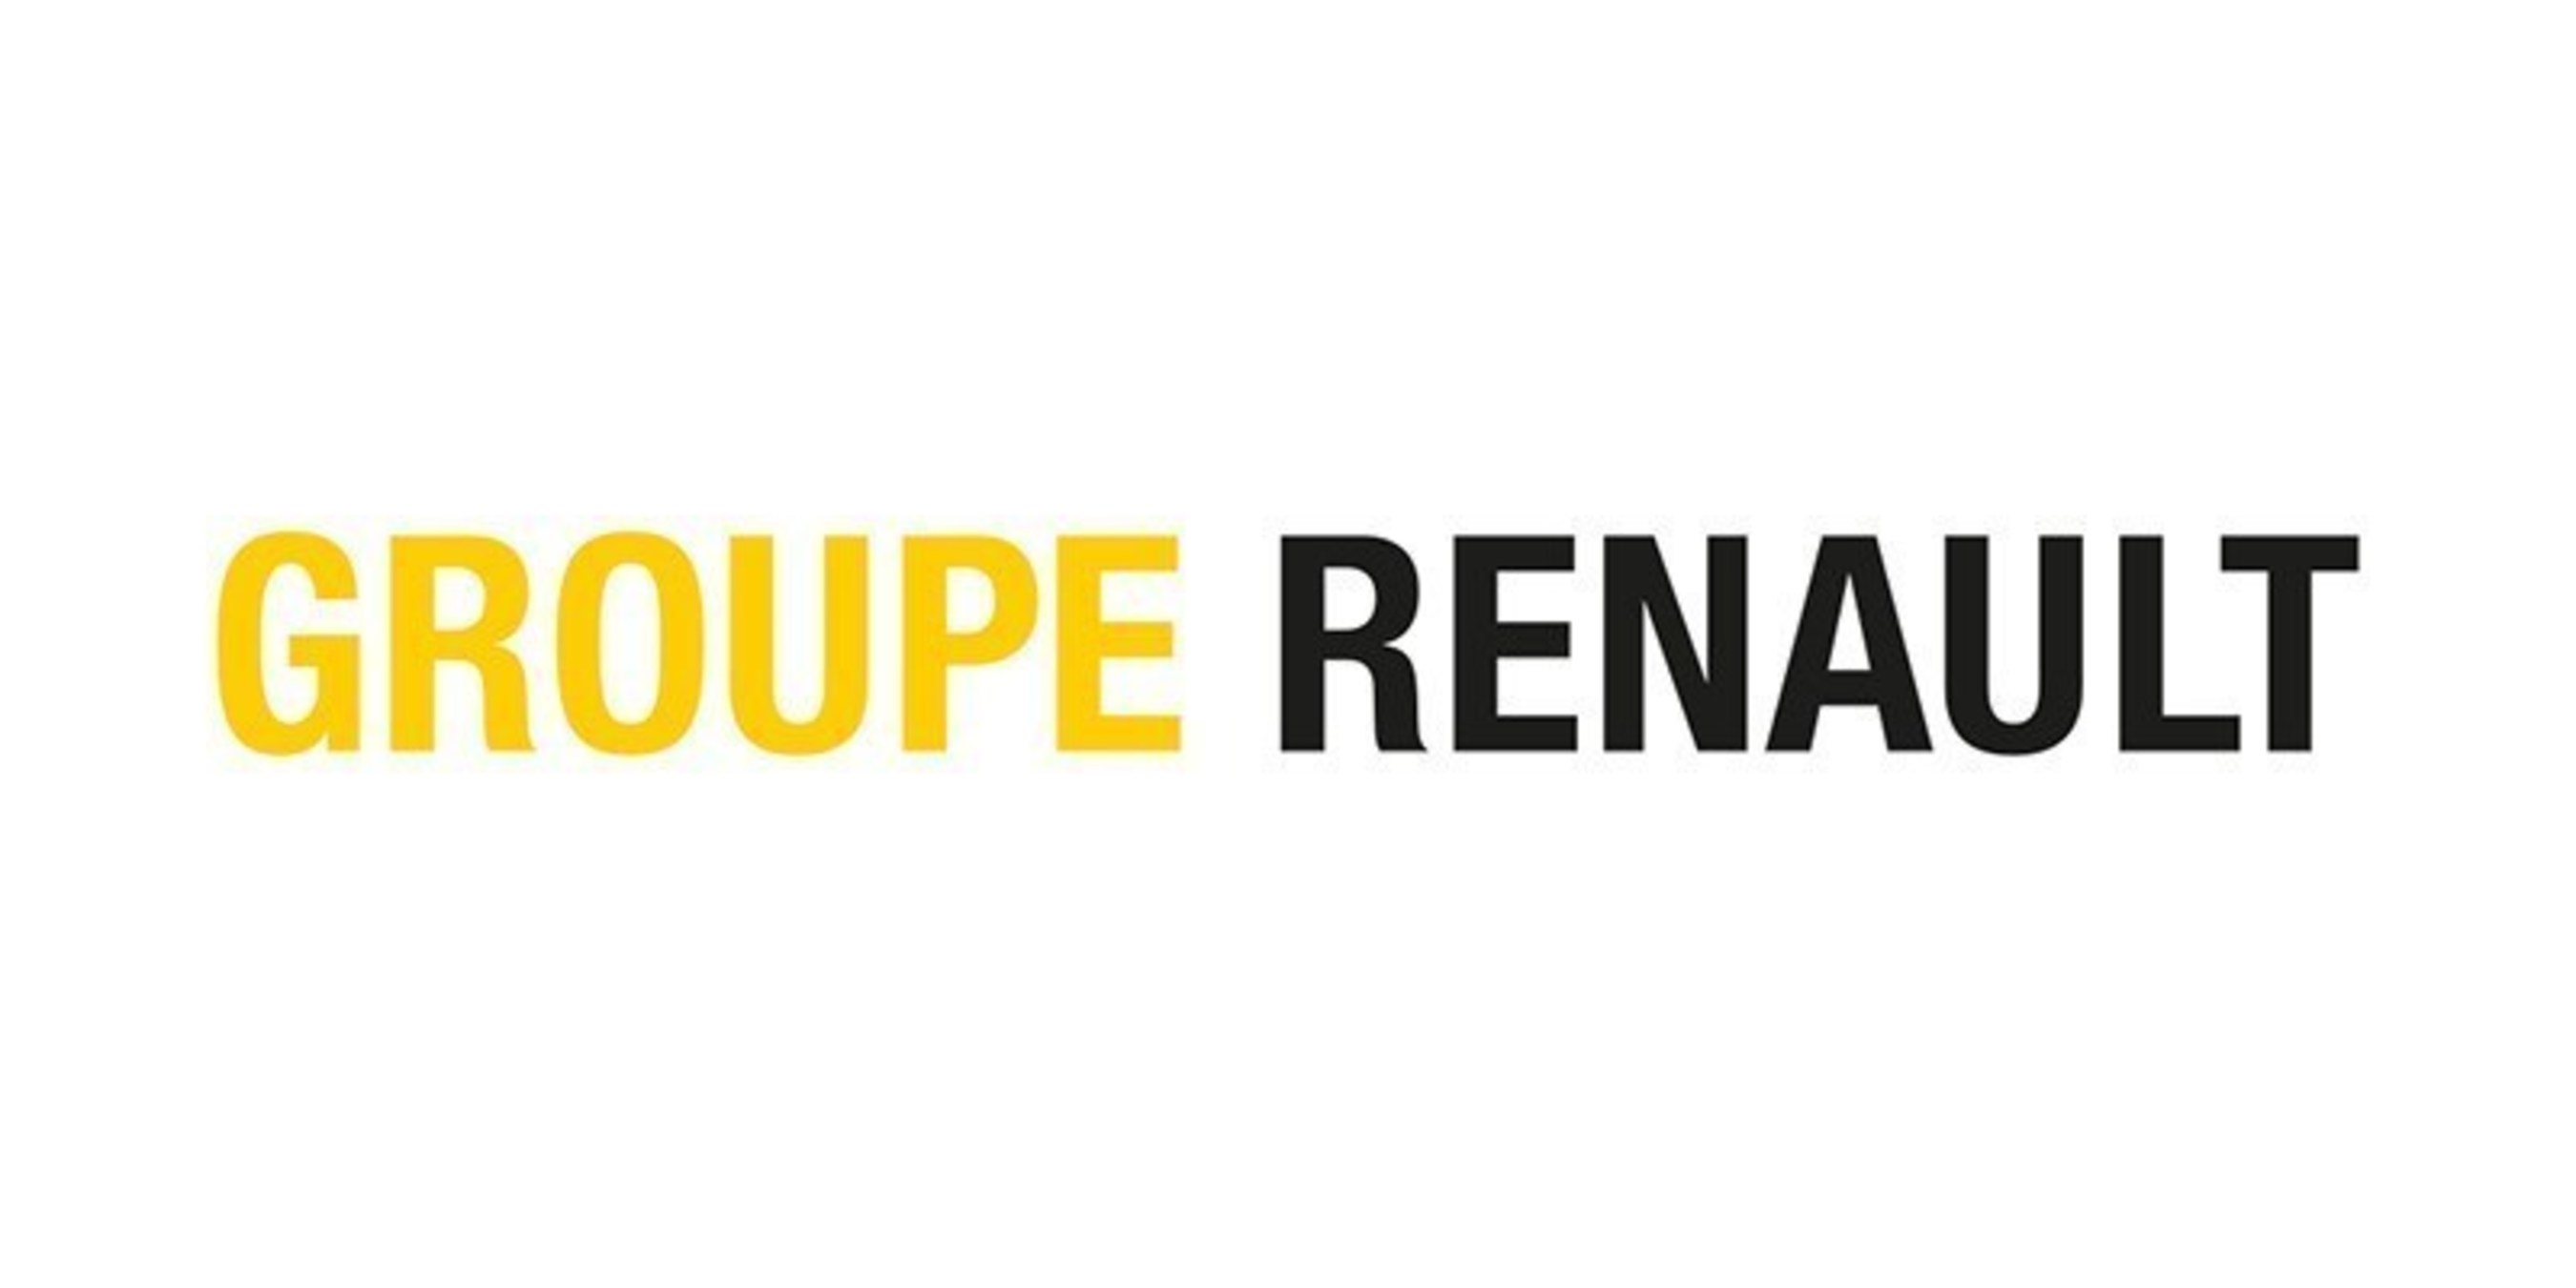 Groupe Renault (PRNewsFoto/Groupe Renault) (PRNewsFoto/Groupe Renault)